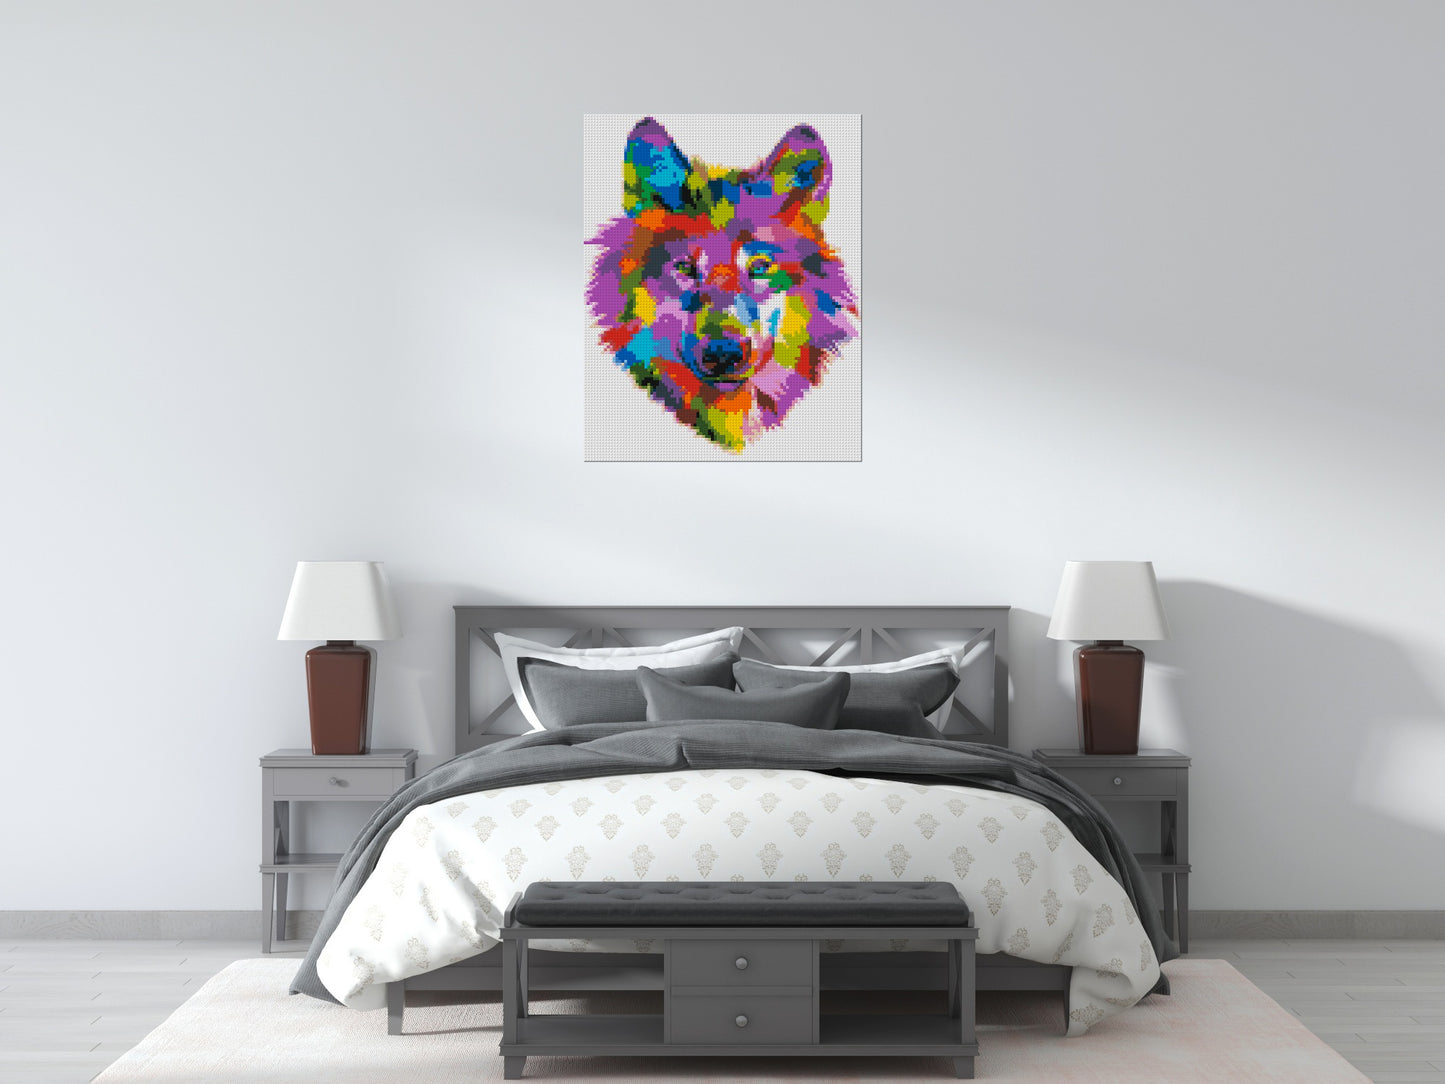 Wolf Colourful Pop Art - Brick Art Mosaic Kit